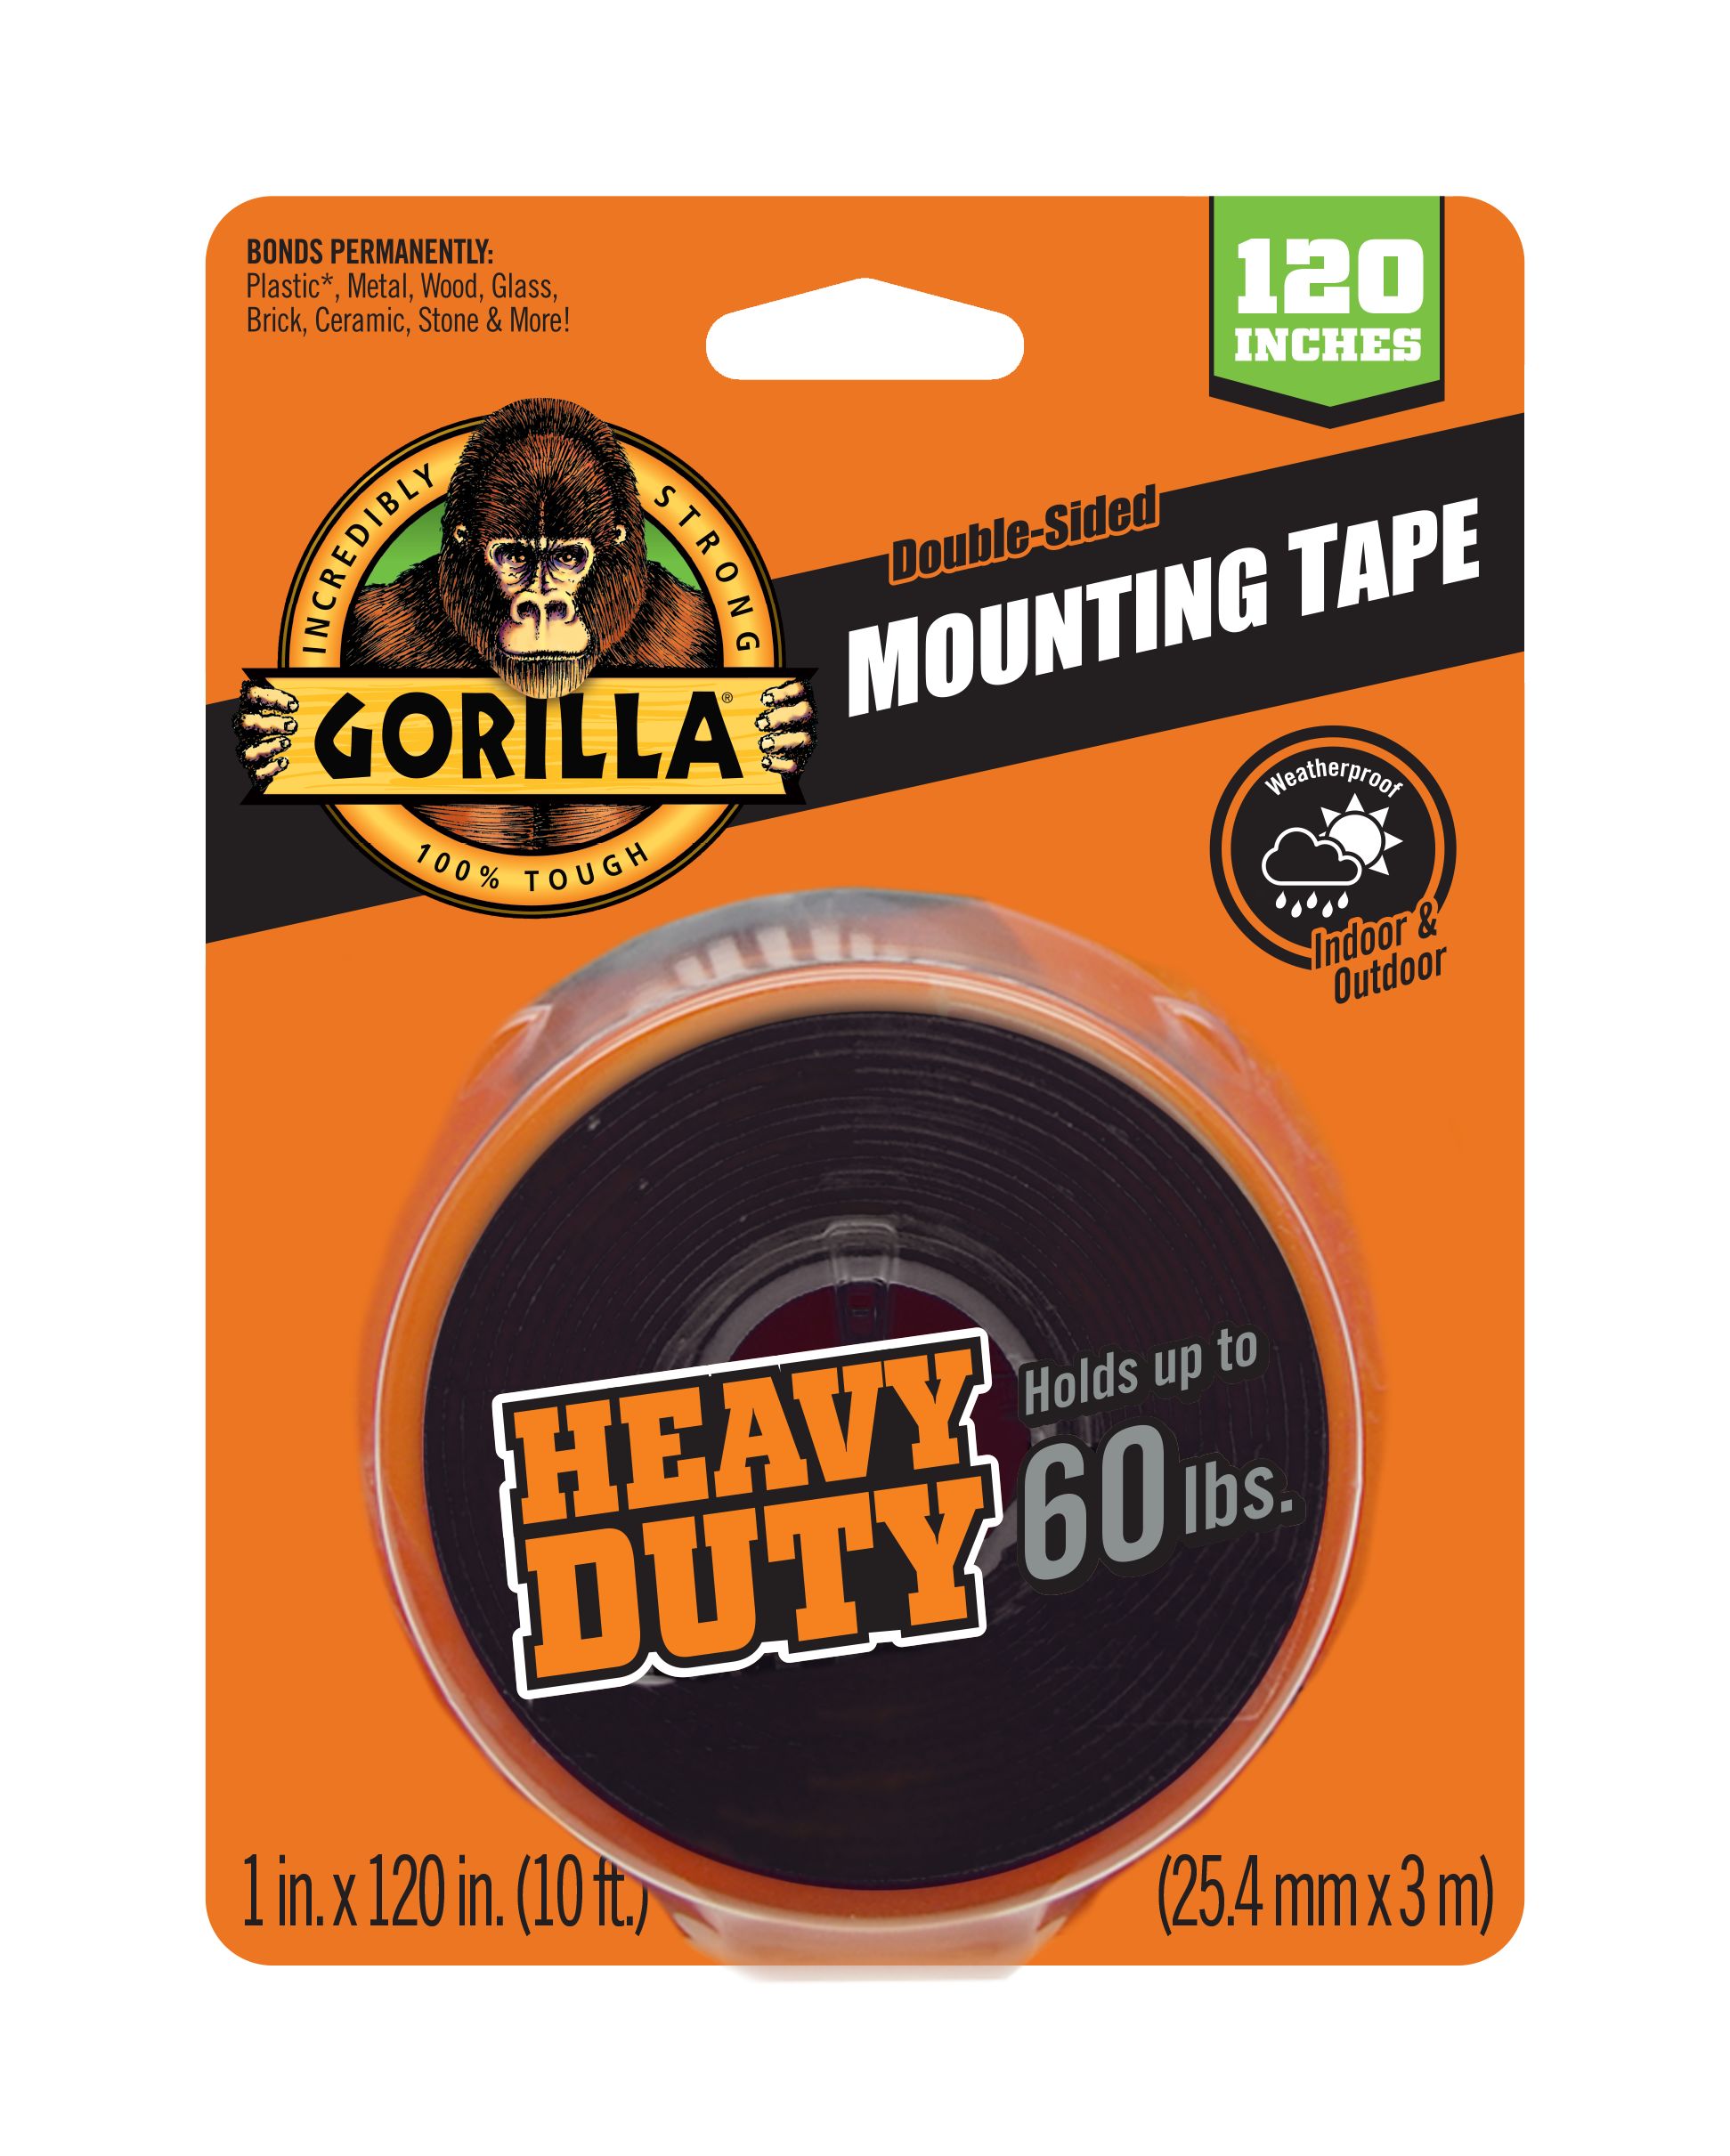 Gorilla Gorilla Heavy Duty Mounting Tape XL at